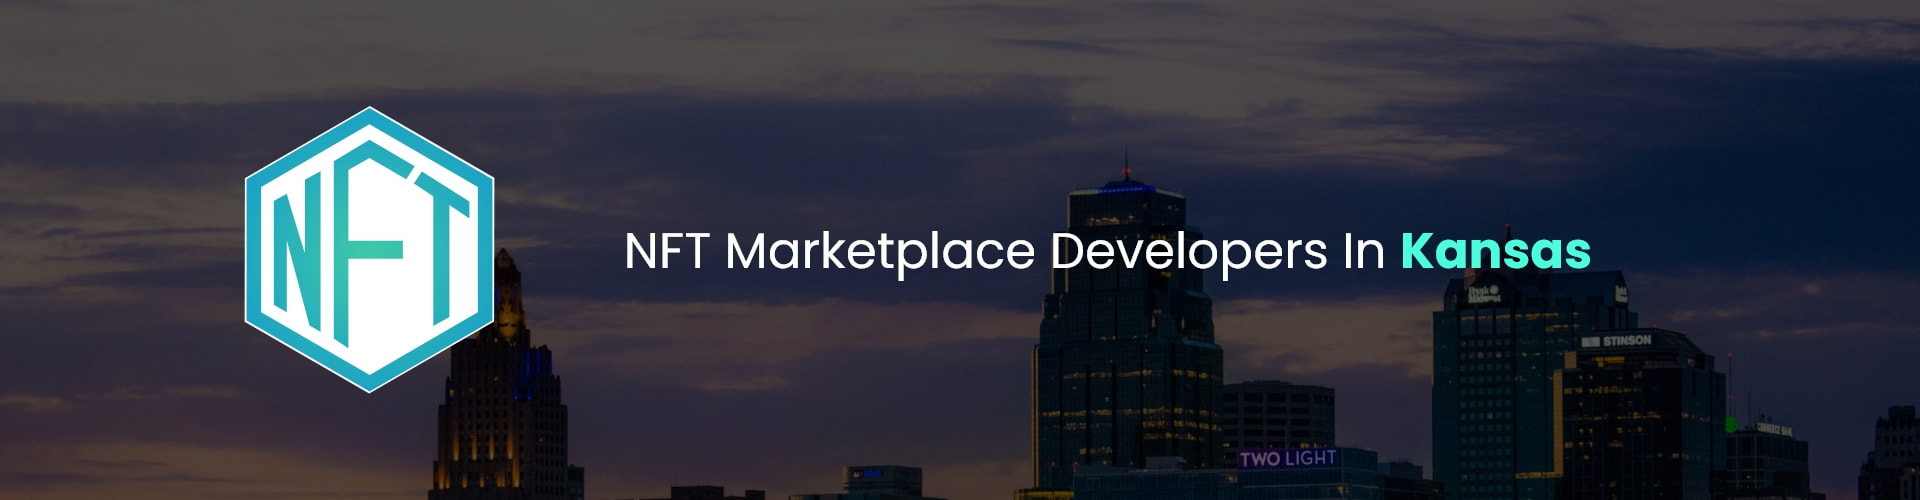 hire nft marketplace developers in kansas